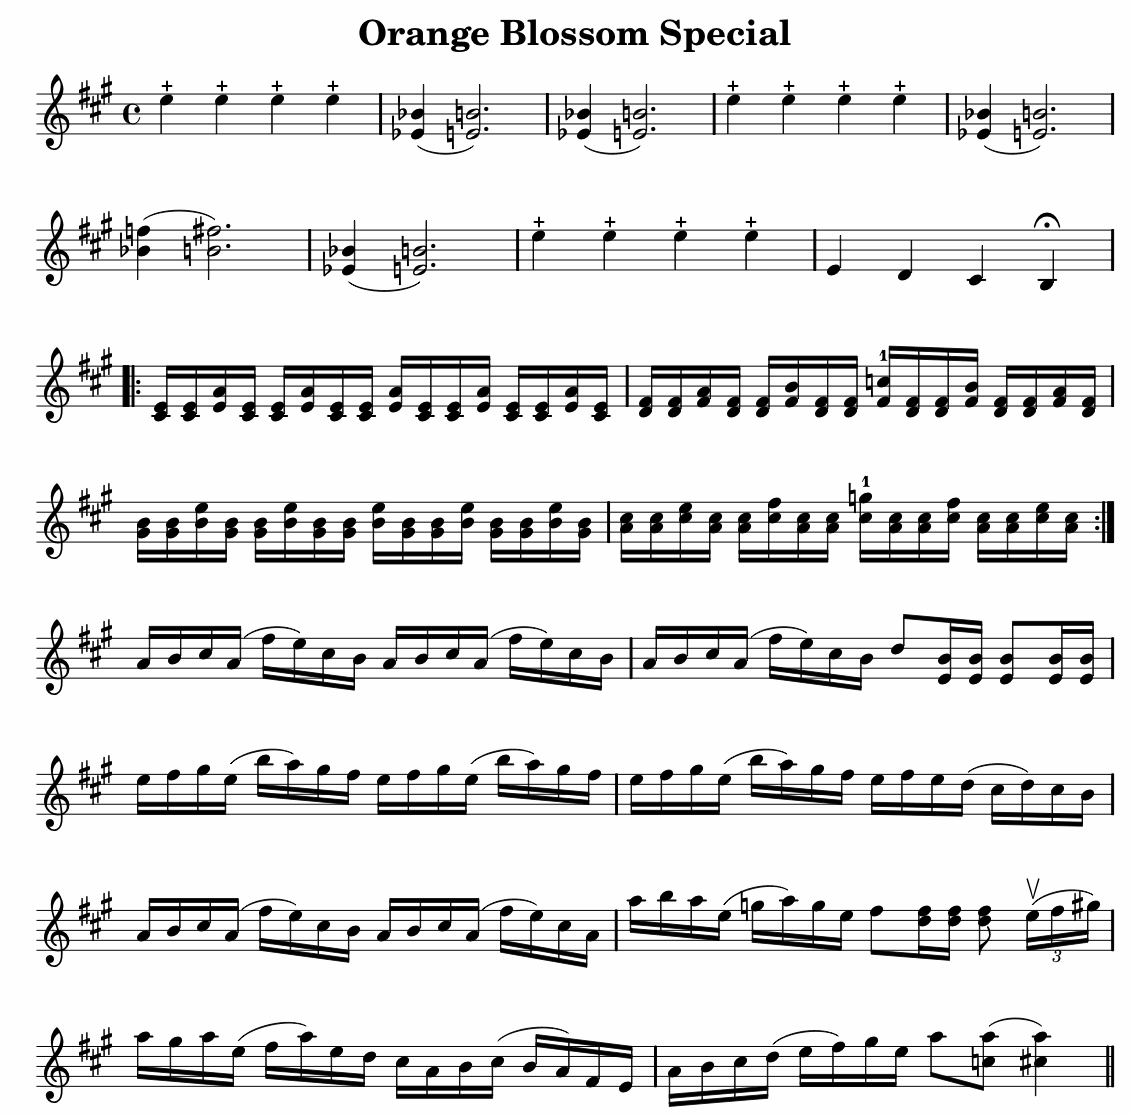 The Orange Blossom Special Sheet Music/Score